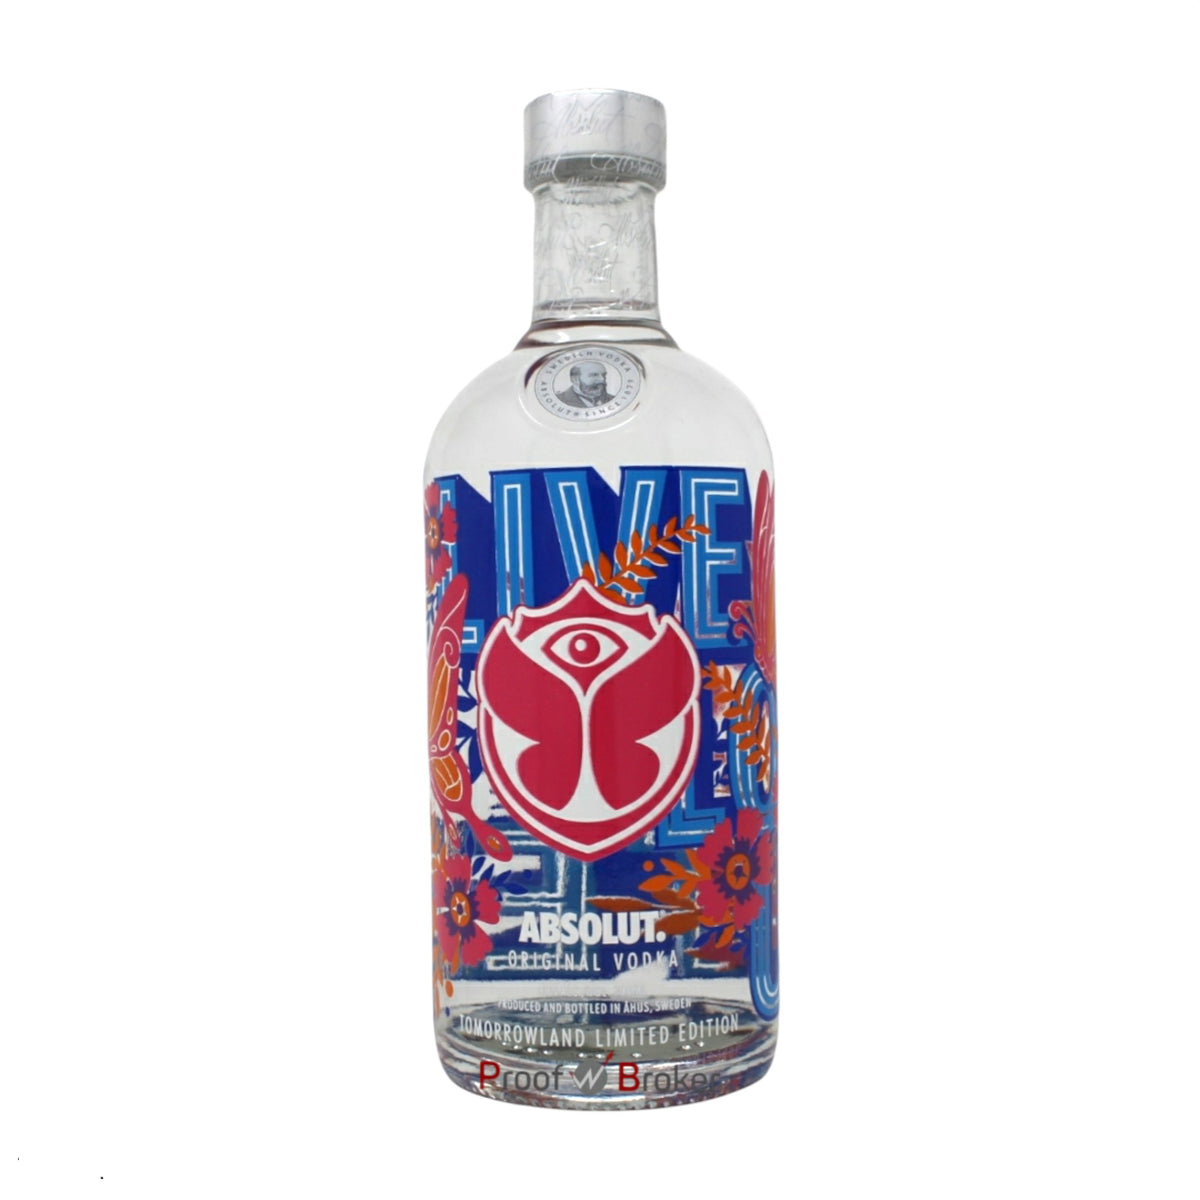 Absolut Vodka Tomorrowland 2021 Edition 0,7 L